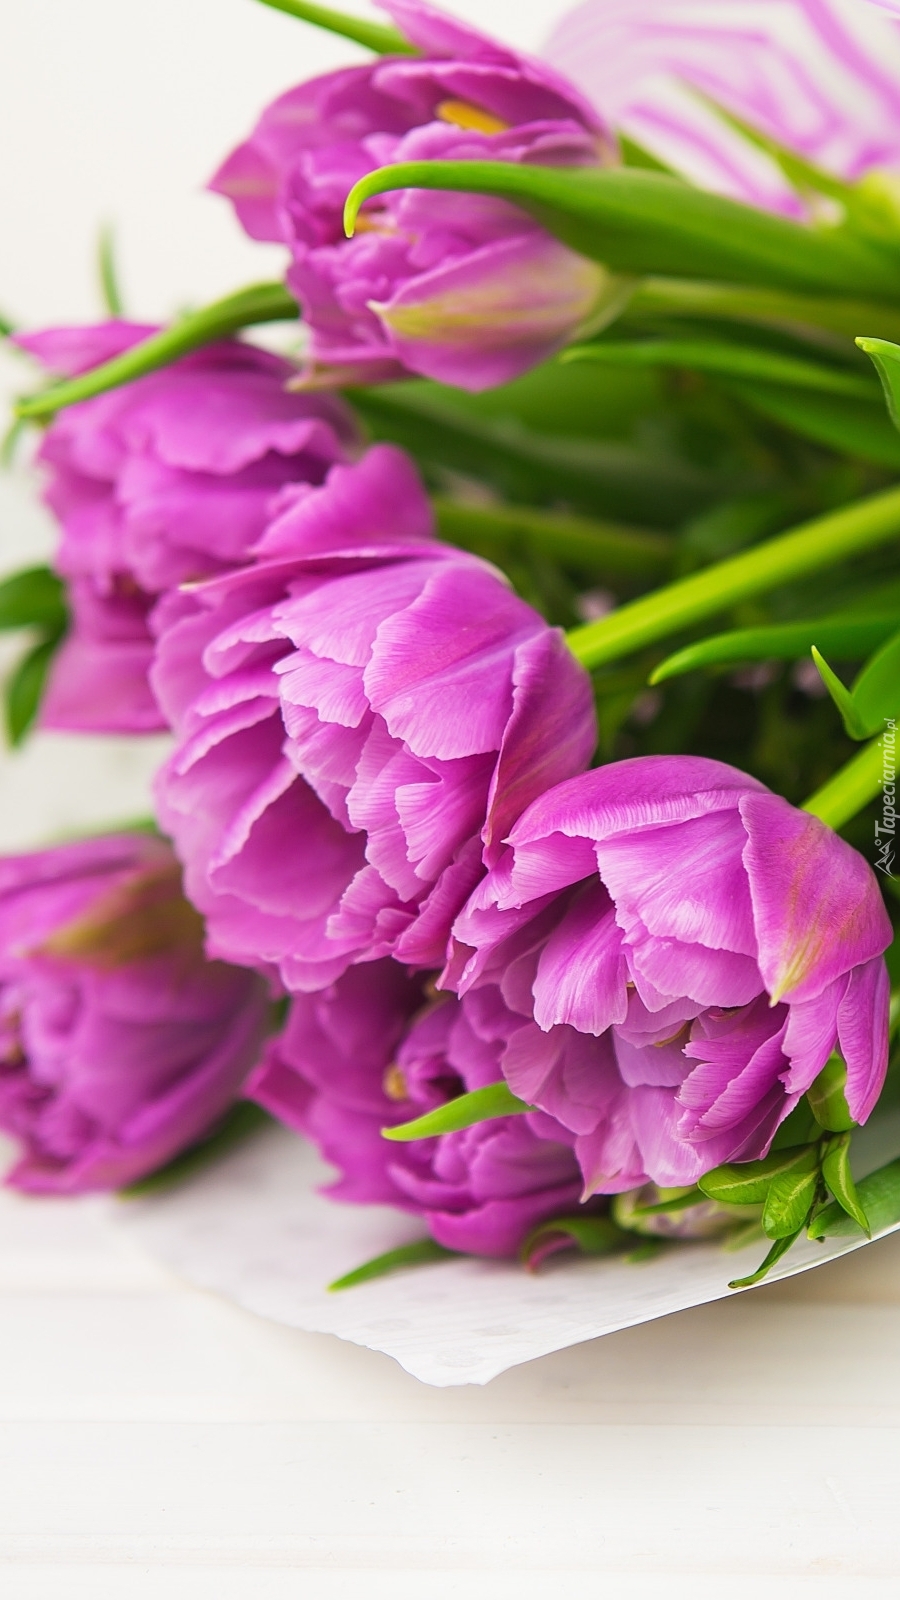 Jasnofioletowe nierozwinięte tulipany